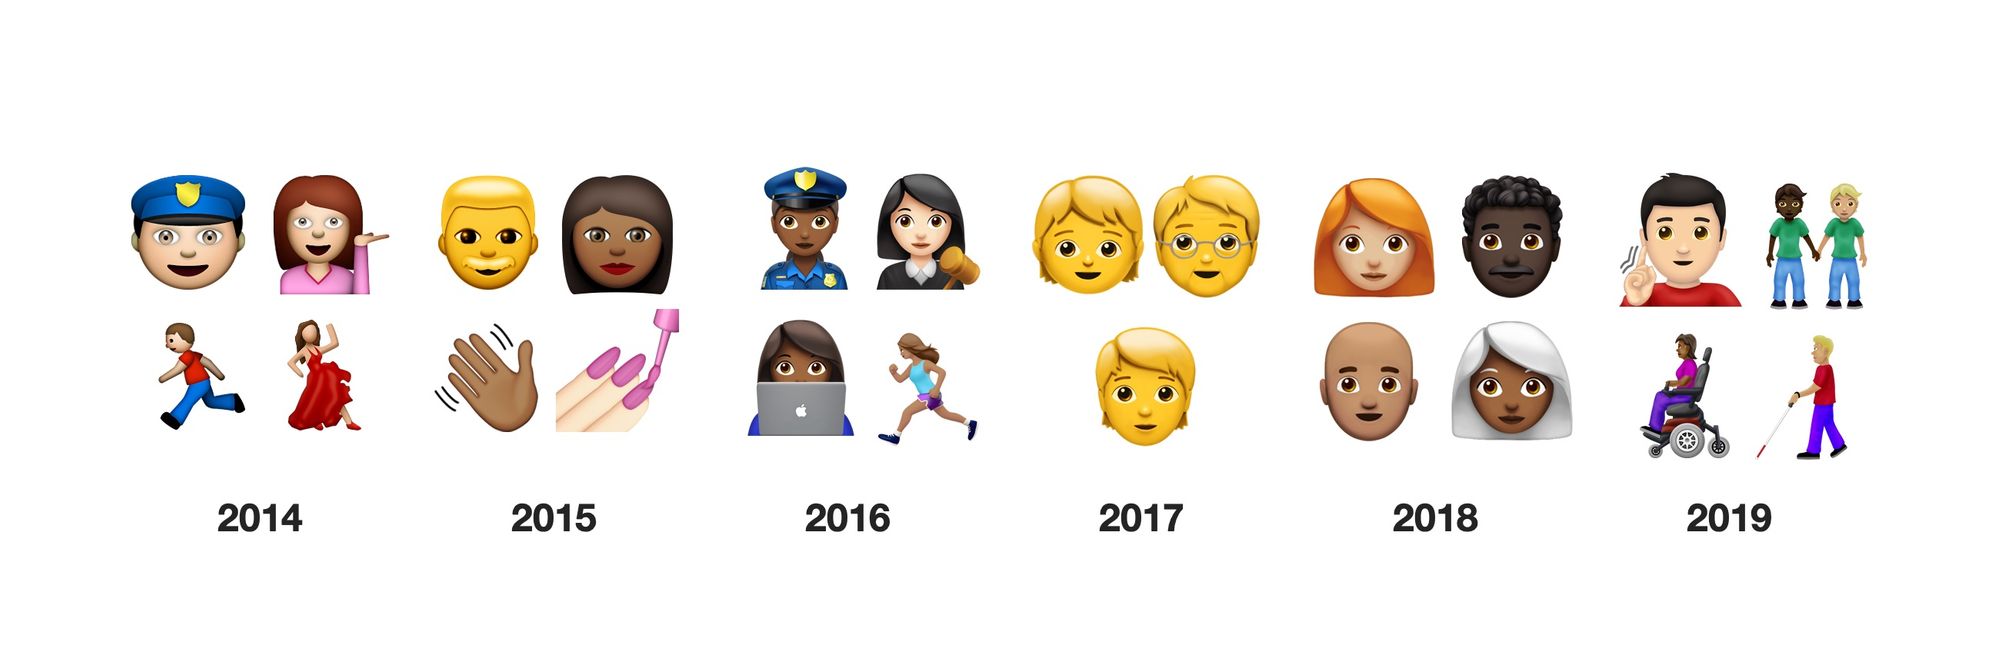 emoji mới, emoji 2019, new memoji 2019, biểu tượng cảm xúc mới, emoji đẹp, ios new icon, biểu tượng ios mới